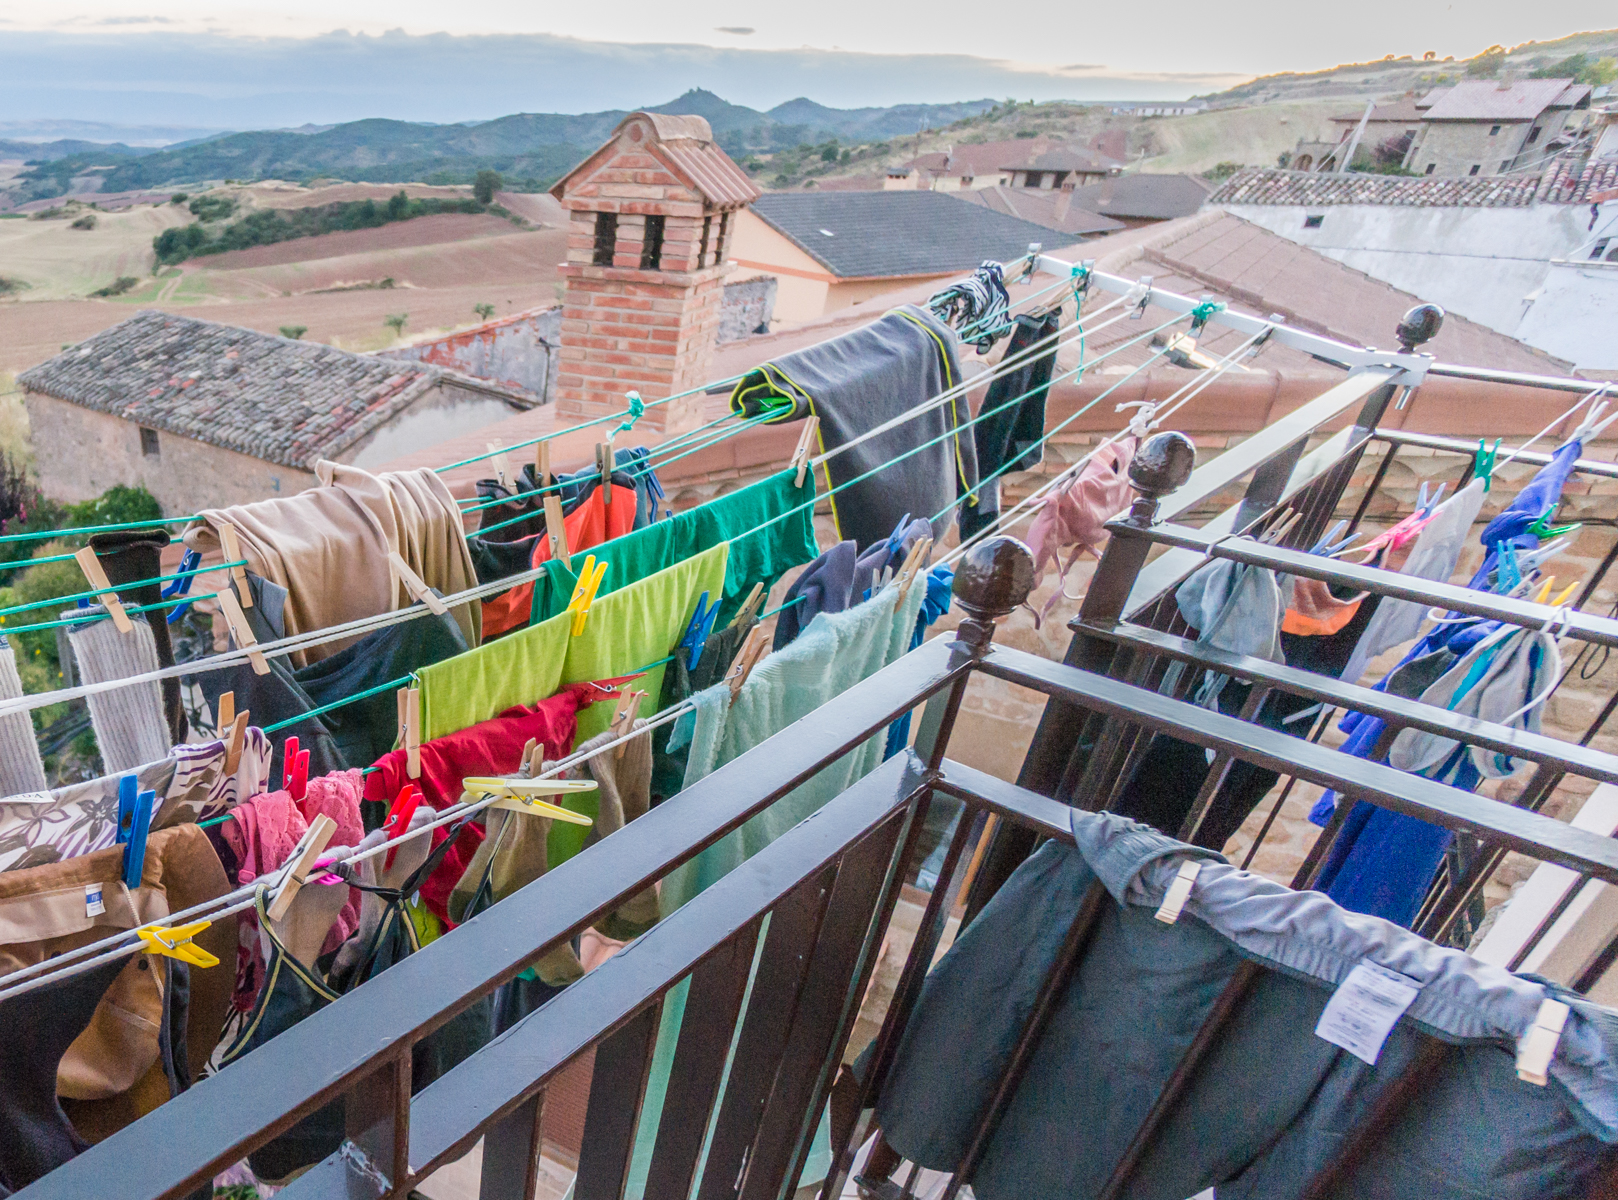 Pilgrim laundry hangs from balcony clotheslines at Albergue Villamayor de Monjardin, Spain | Photo by Mike Hudak